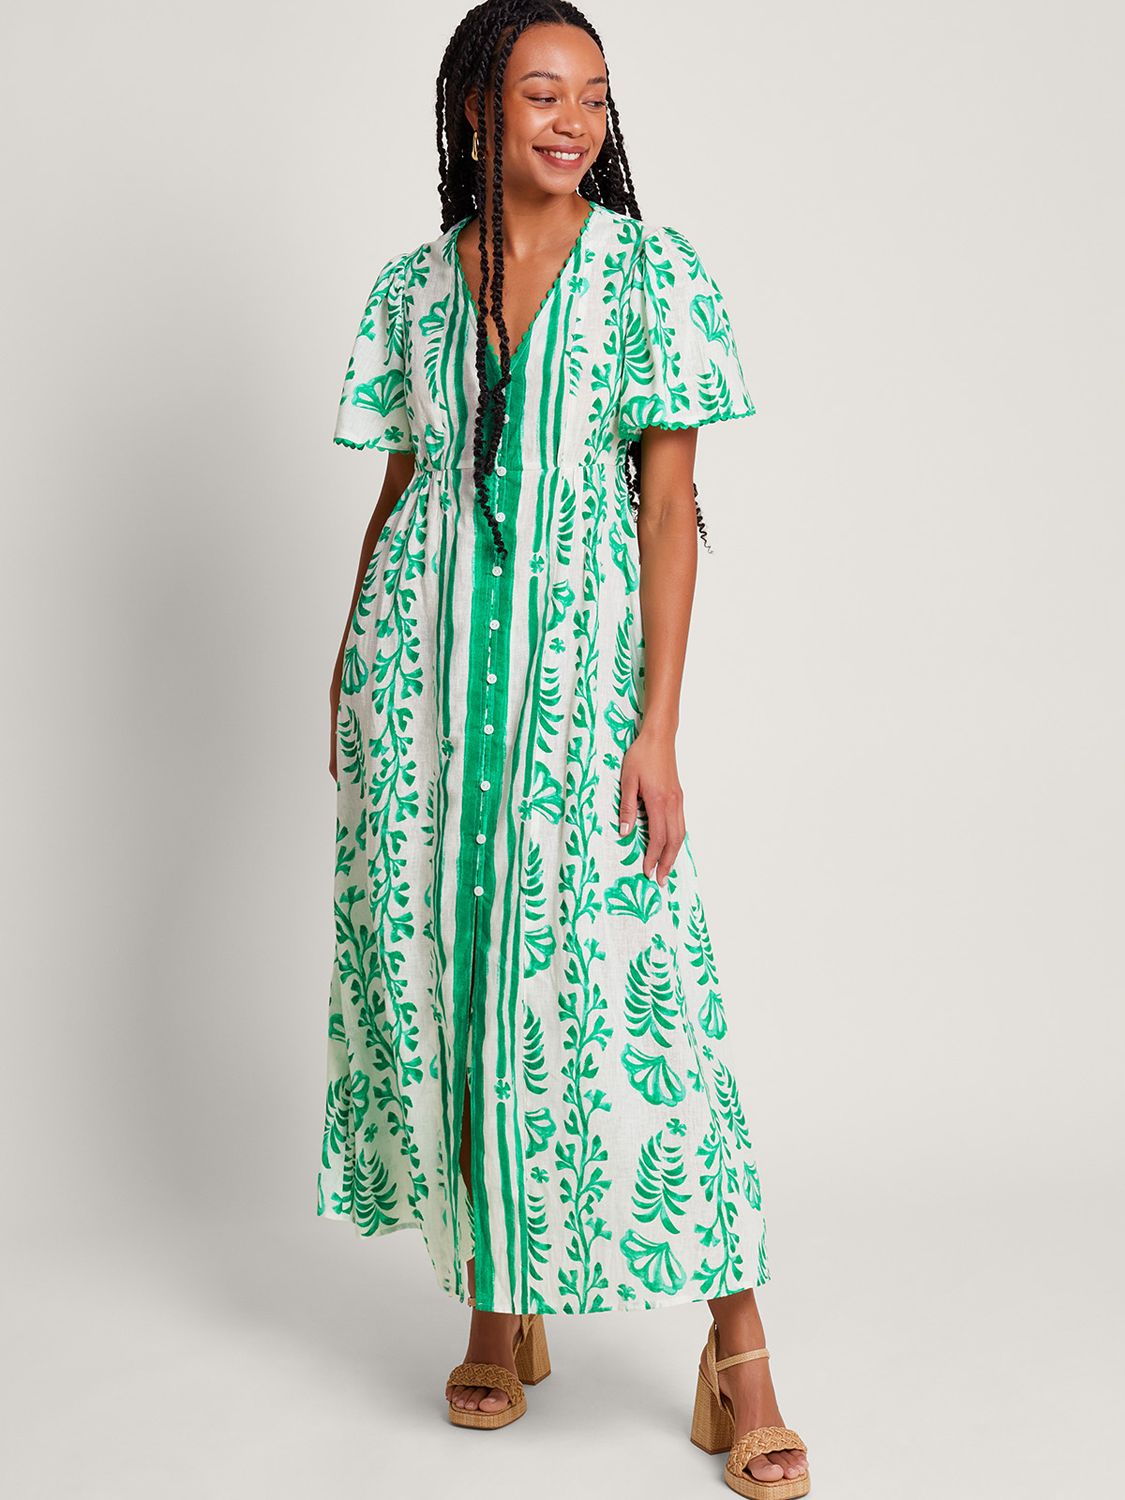 Monsoon Lani Linen Blend Button Down Maxi Dress, Ivory/Green, S